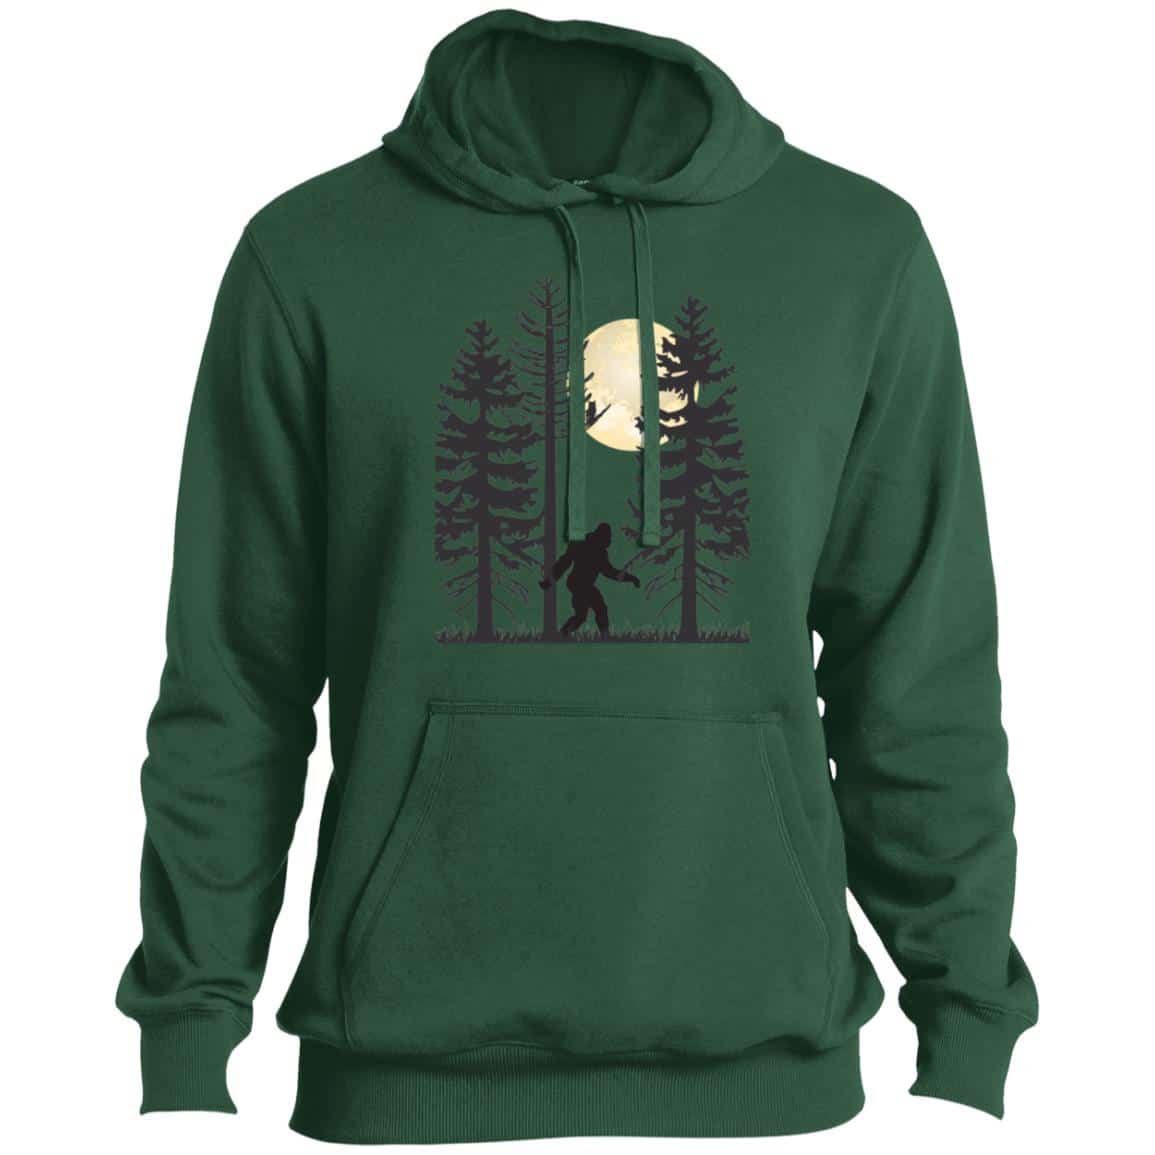 Green premium Bigfoot pullover hoodie